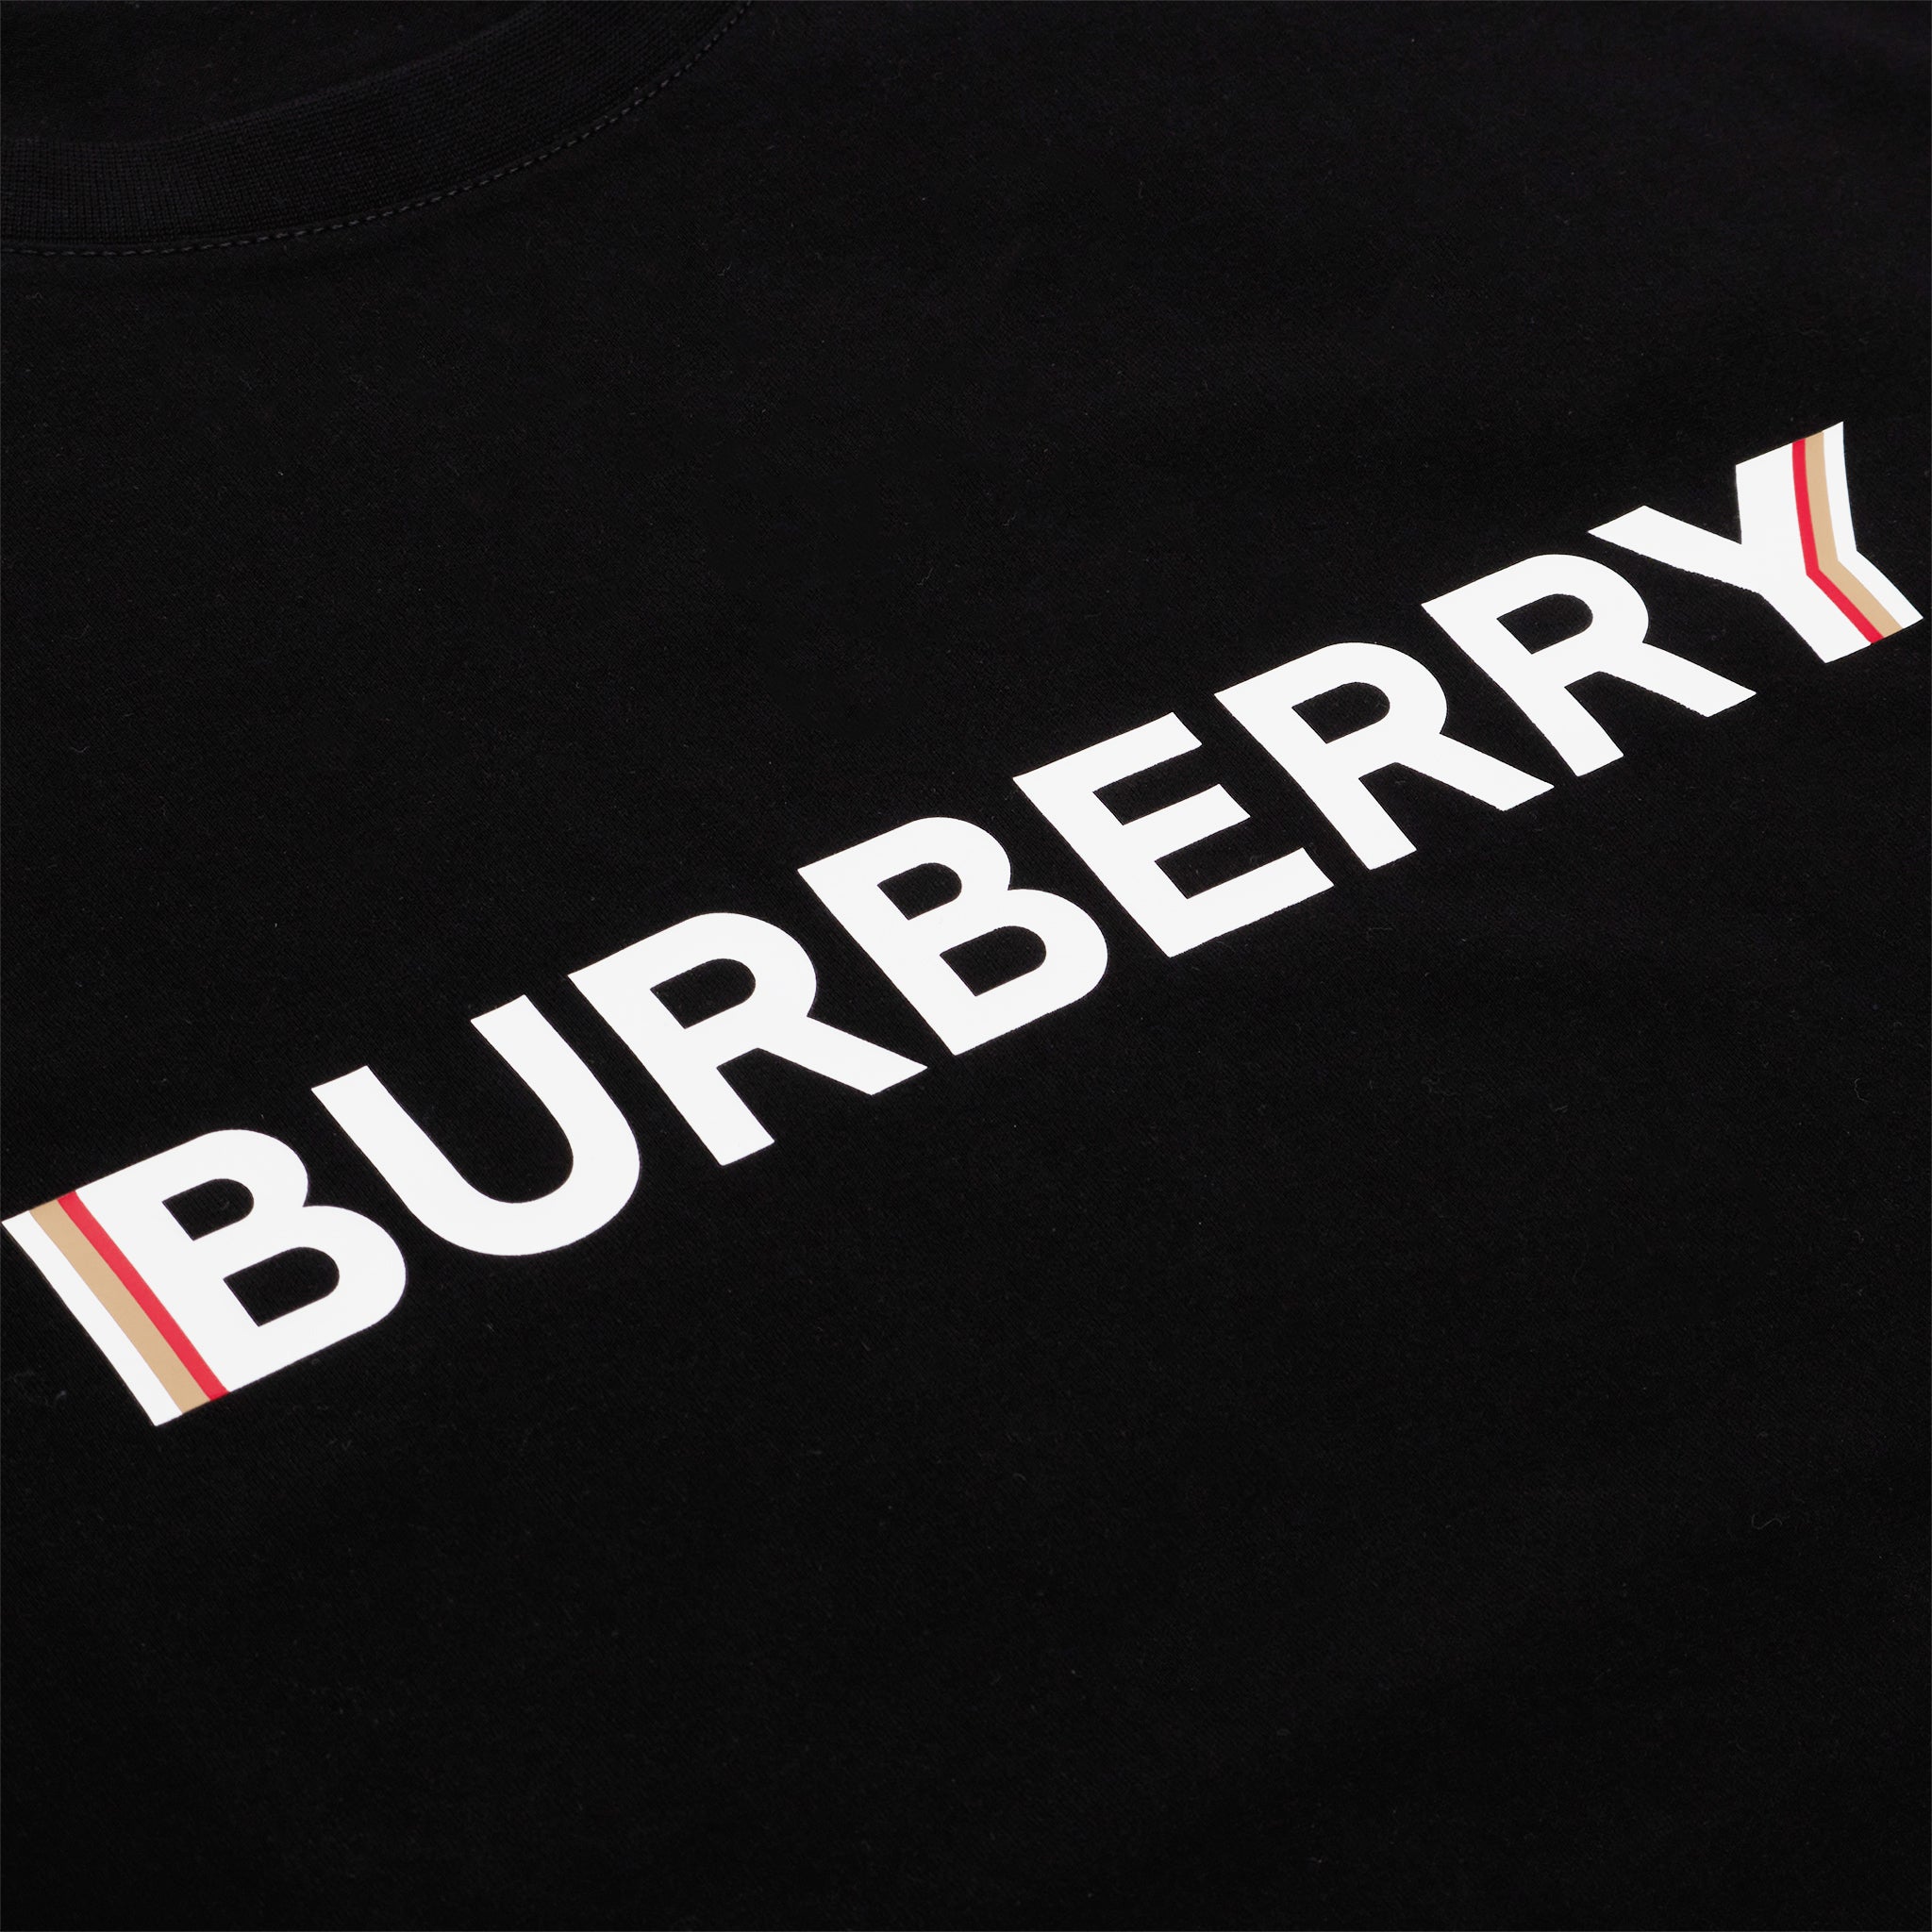 Burberry Ellison Black T Shirt – Crepslocker